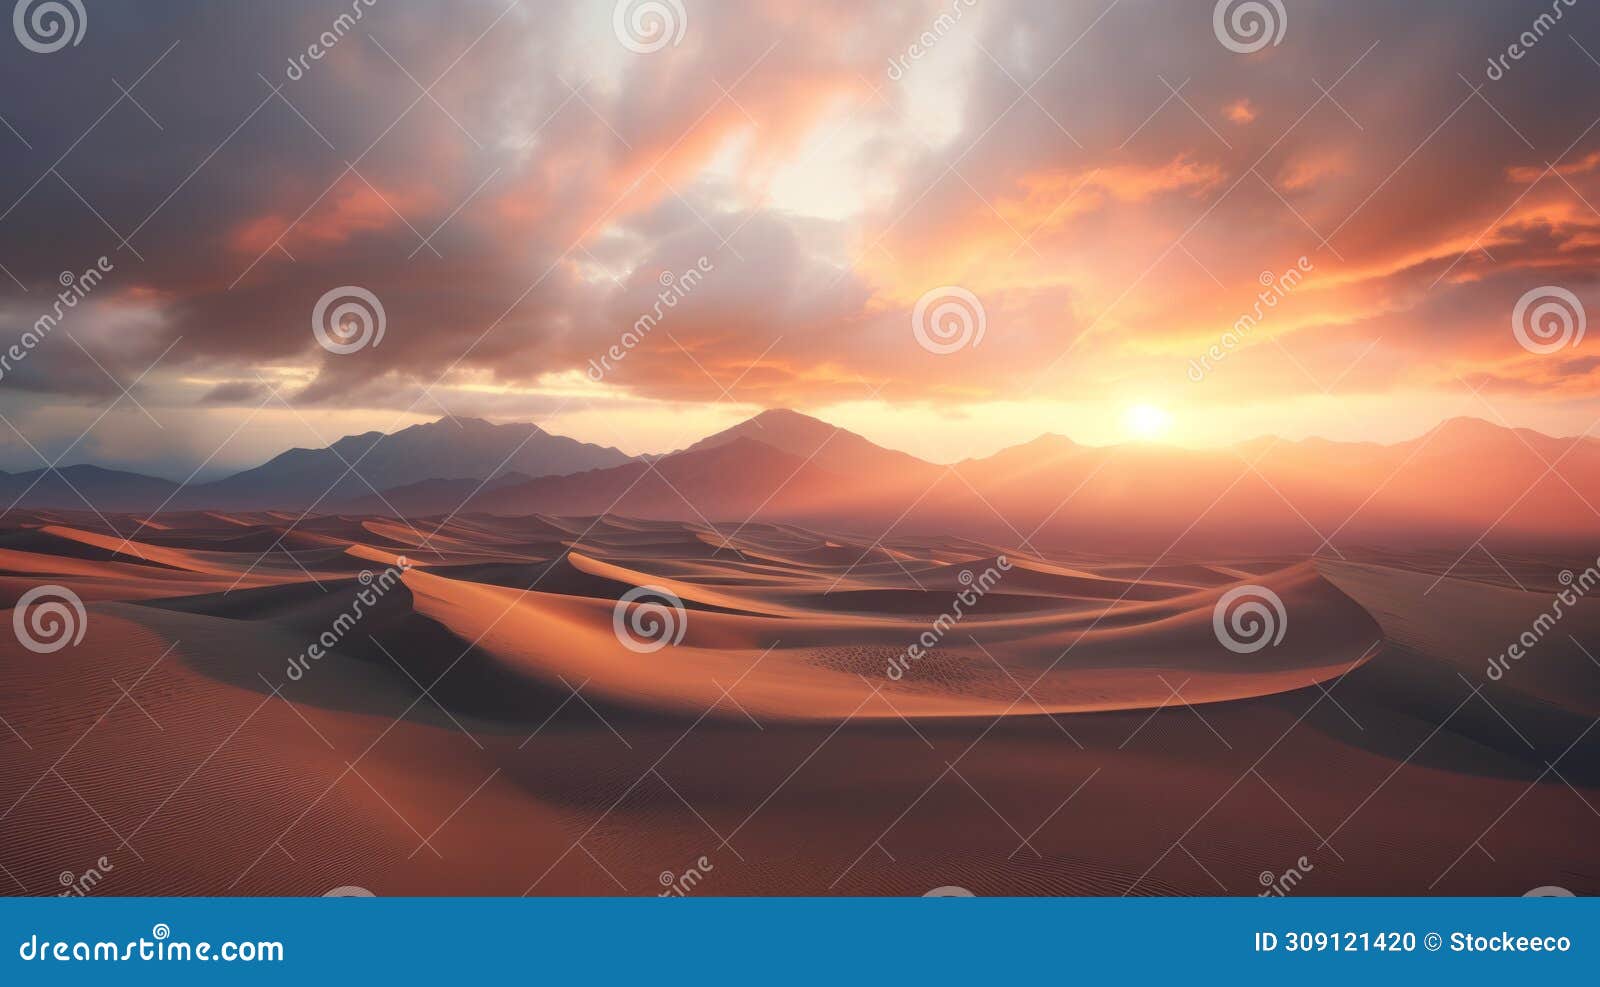 stunning sunrise photography: majestic sand dunes with godrays